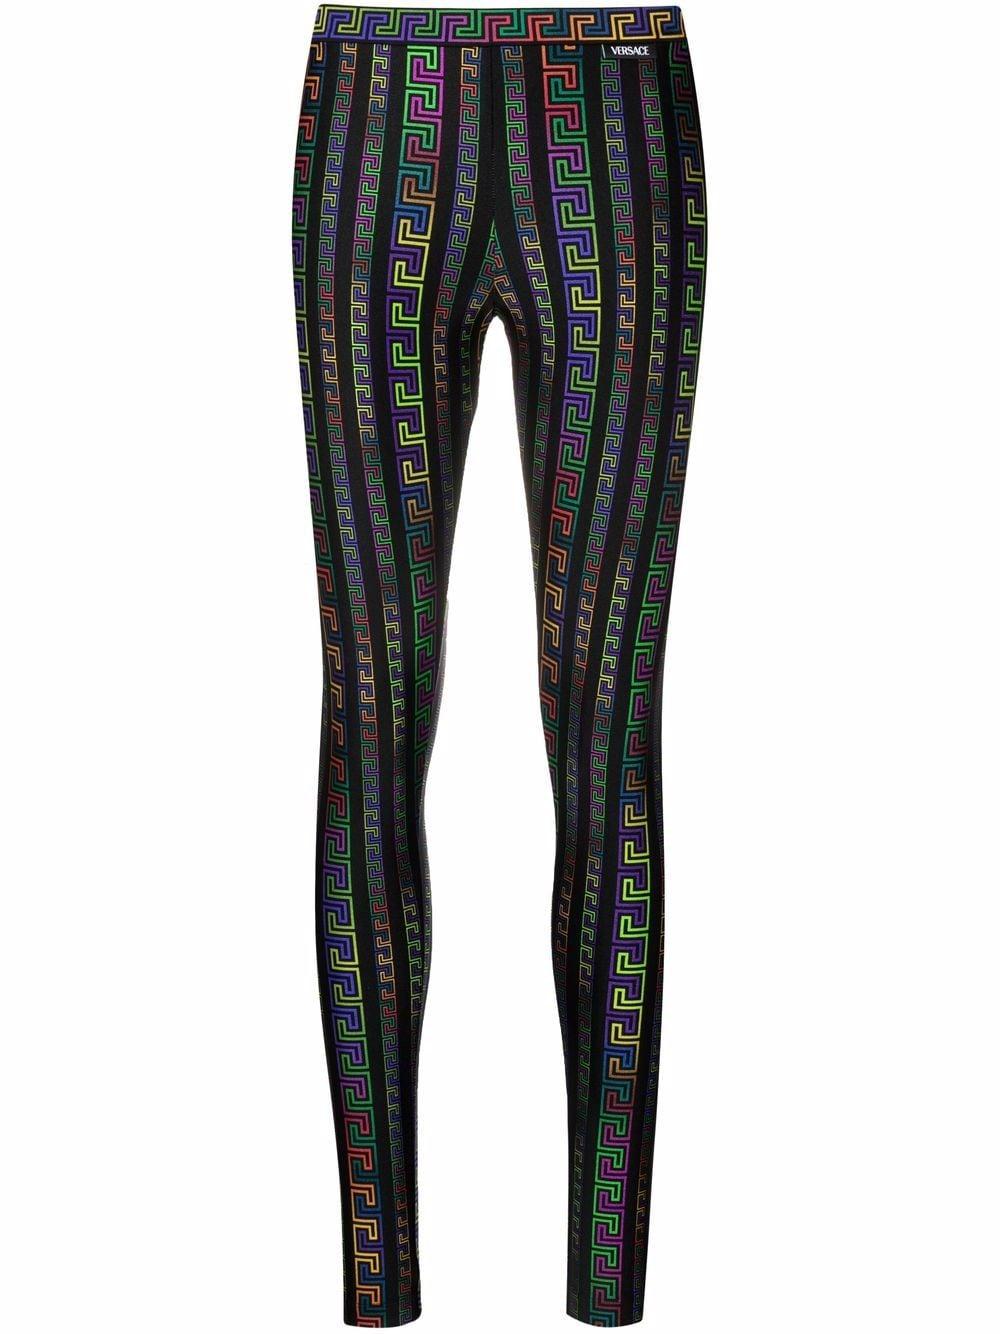 https://cdna.lystit.com/photos/farfetch/bf0439e9/versace-black-Greca-Neon-print-leggings.jpeg